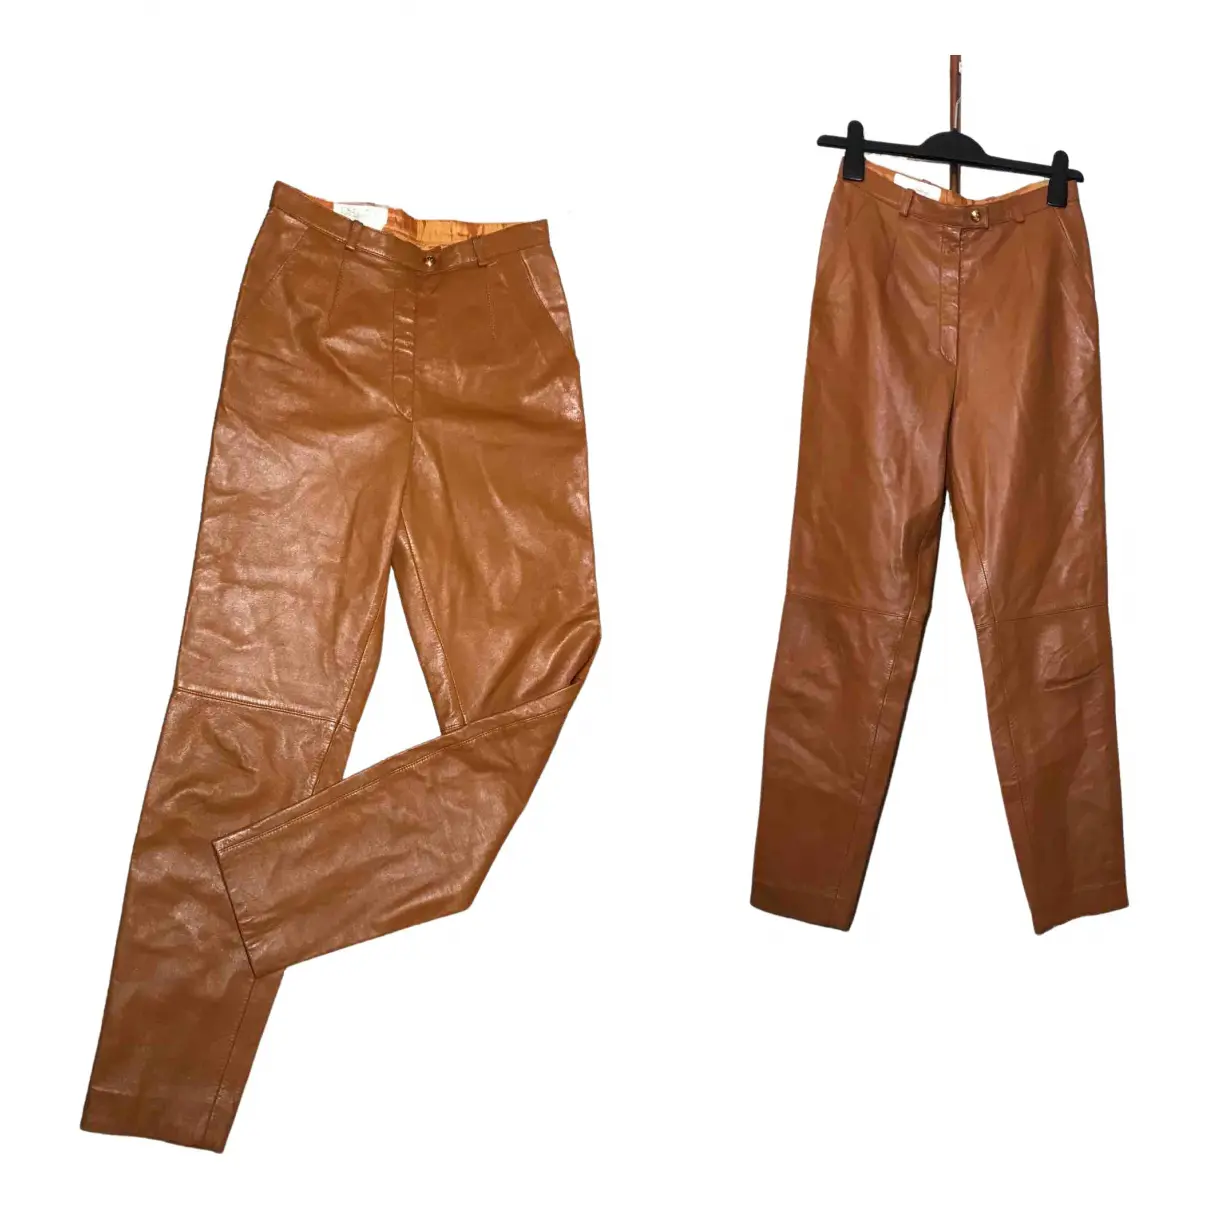 Buy Escada Leather carot pants online